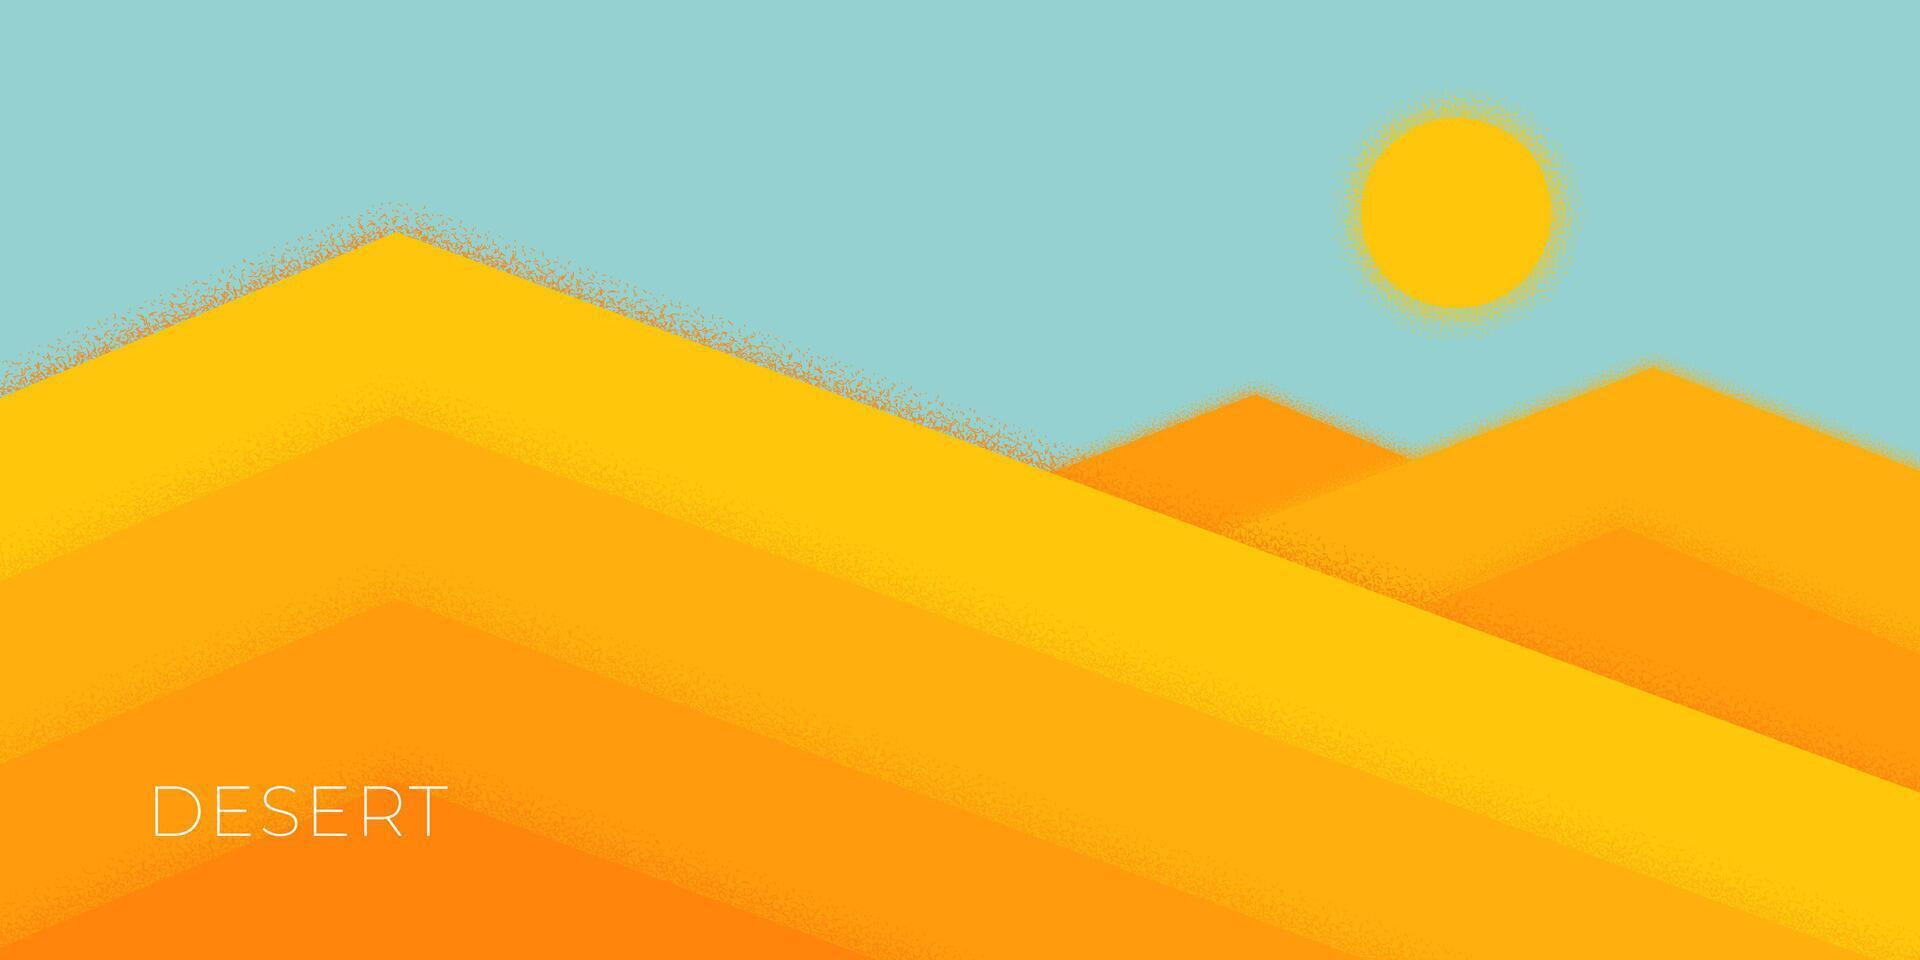 abstrakt retro minimal sommar resa horisontell baner. öken- sand sanddyner under solljus på Semester årgång affisch. sahara sandig kullar semester trendig minimalistisk plakat. sommartid resa eps design vektor